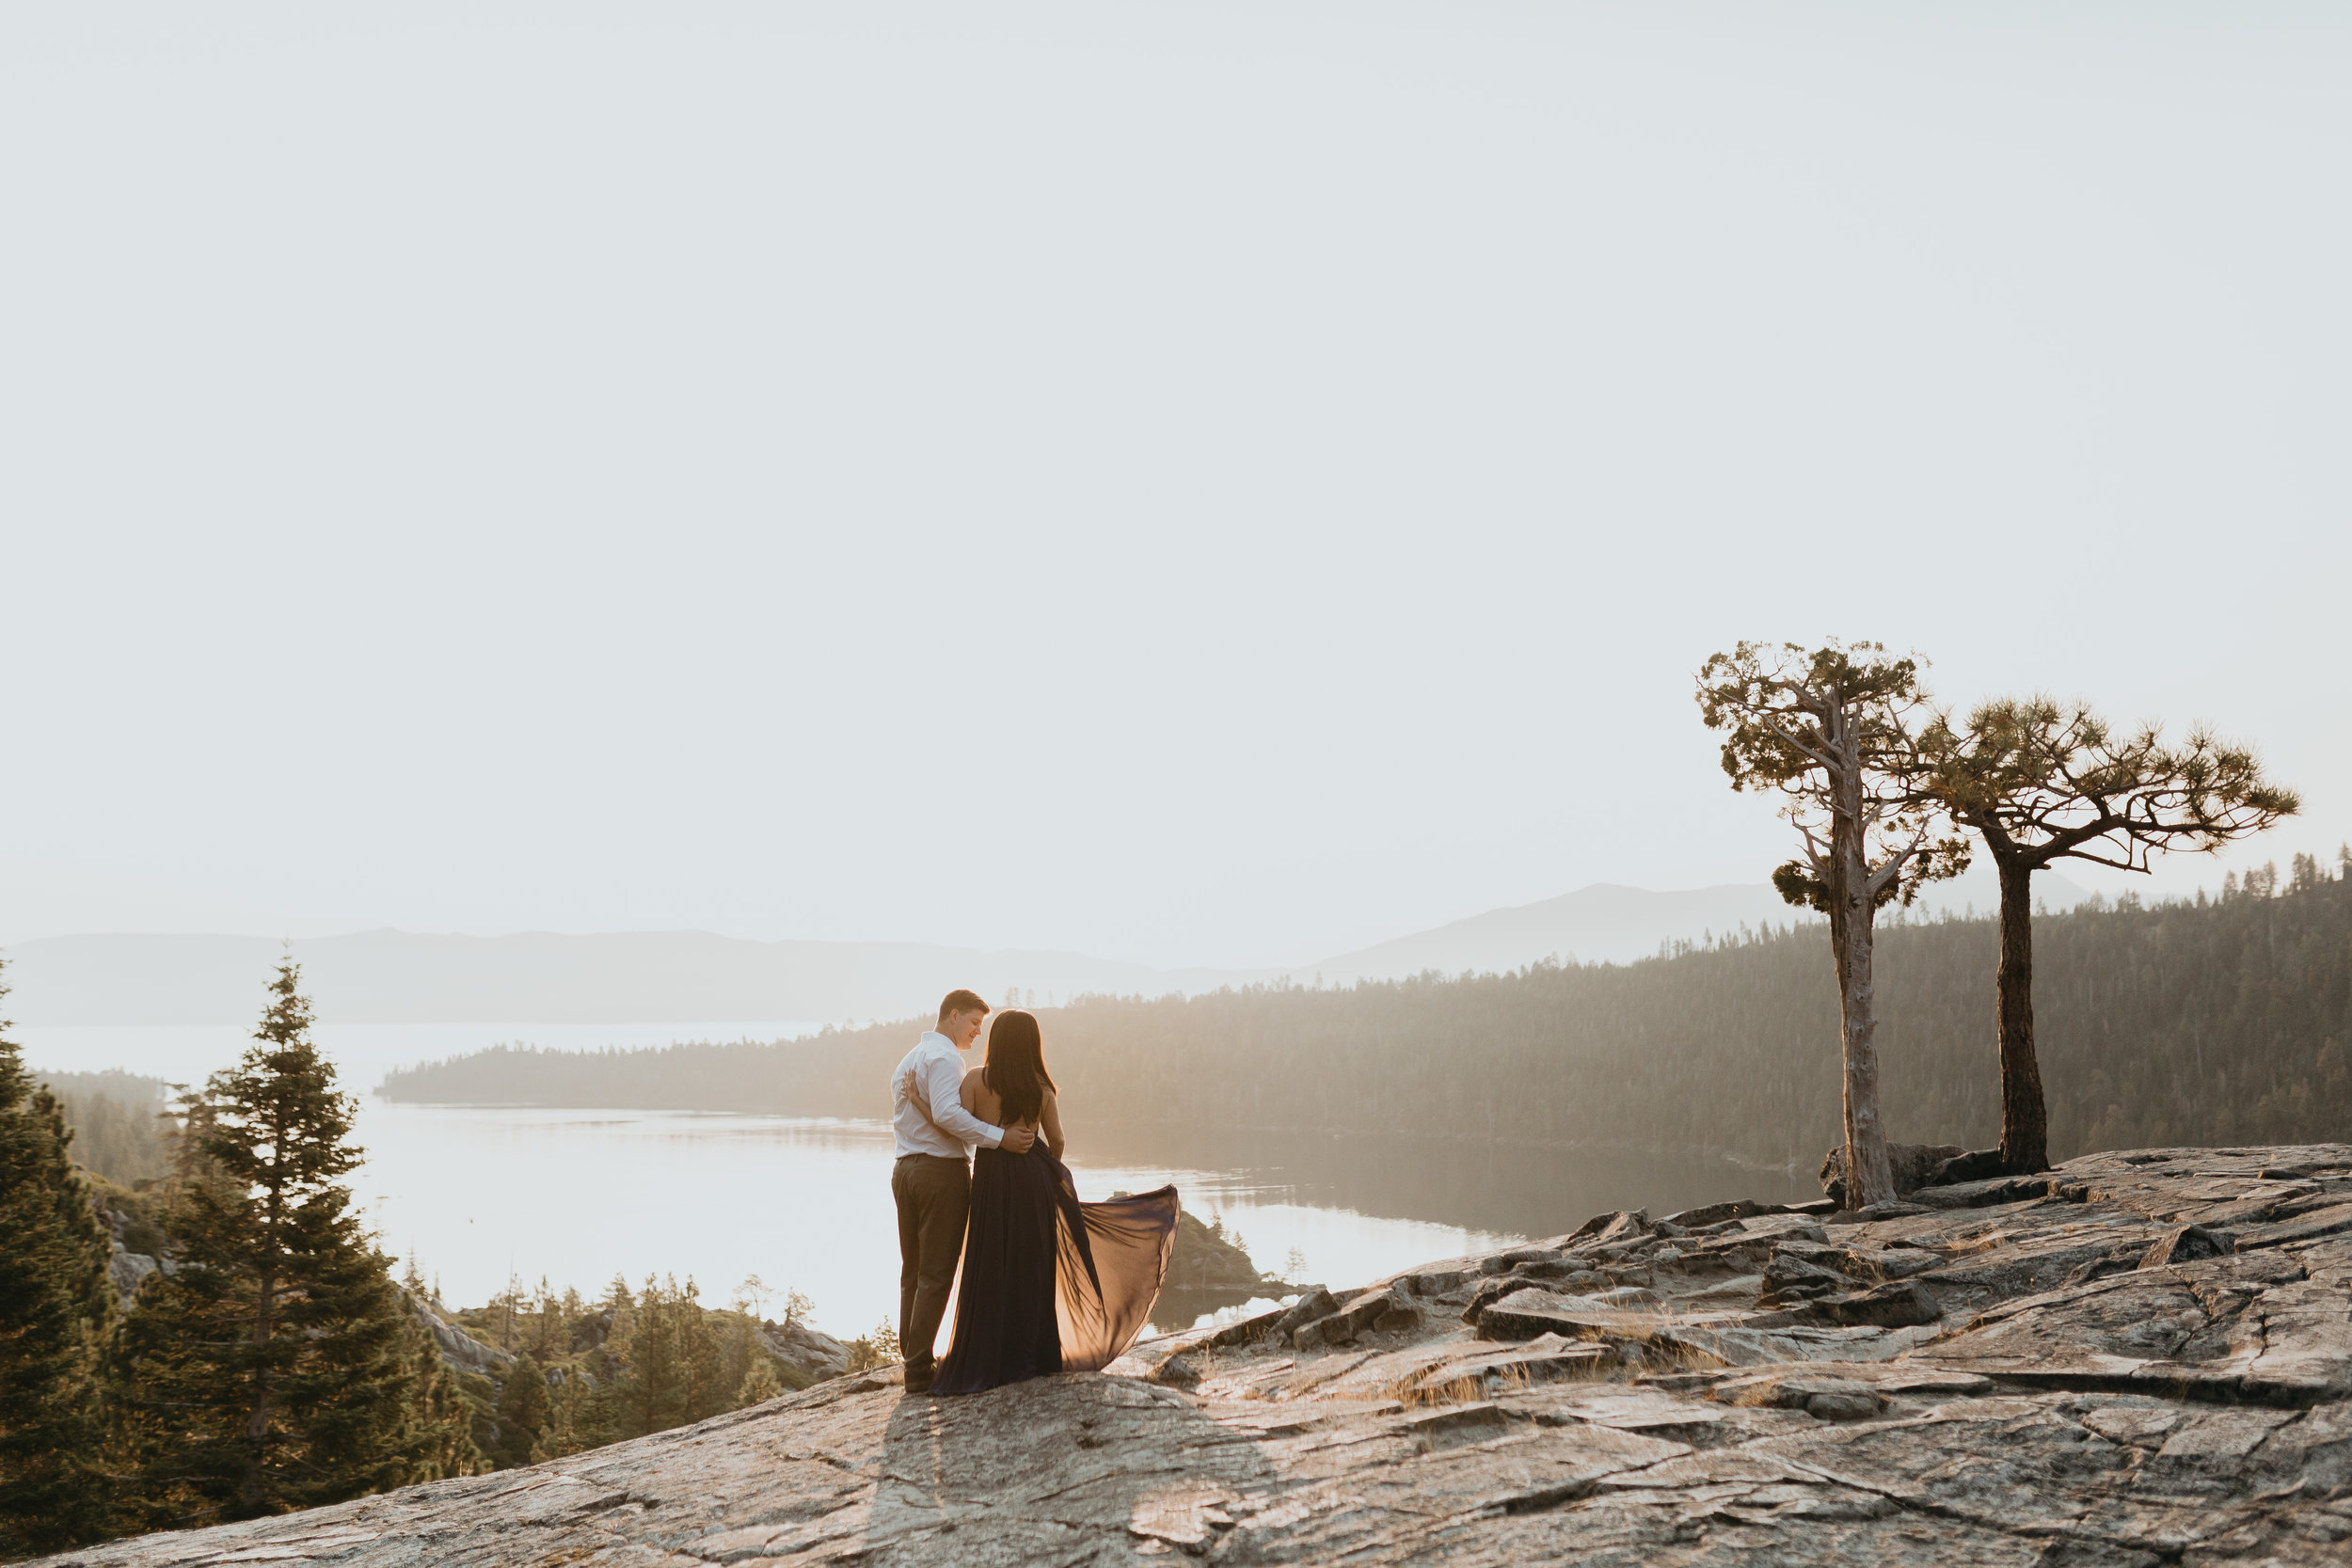 nicole-daacke-photography-lake-tahoe-sunrise-summer-adventure-engagement-photos-nevada-wedding-elopement-photographer-golden-emerald-bay-light-pine-trees-summer-vibe-fun-carefree-authentic-love-32.jpg